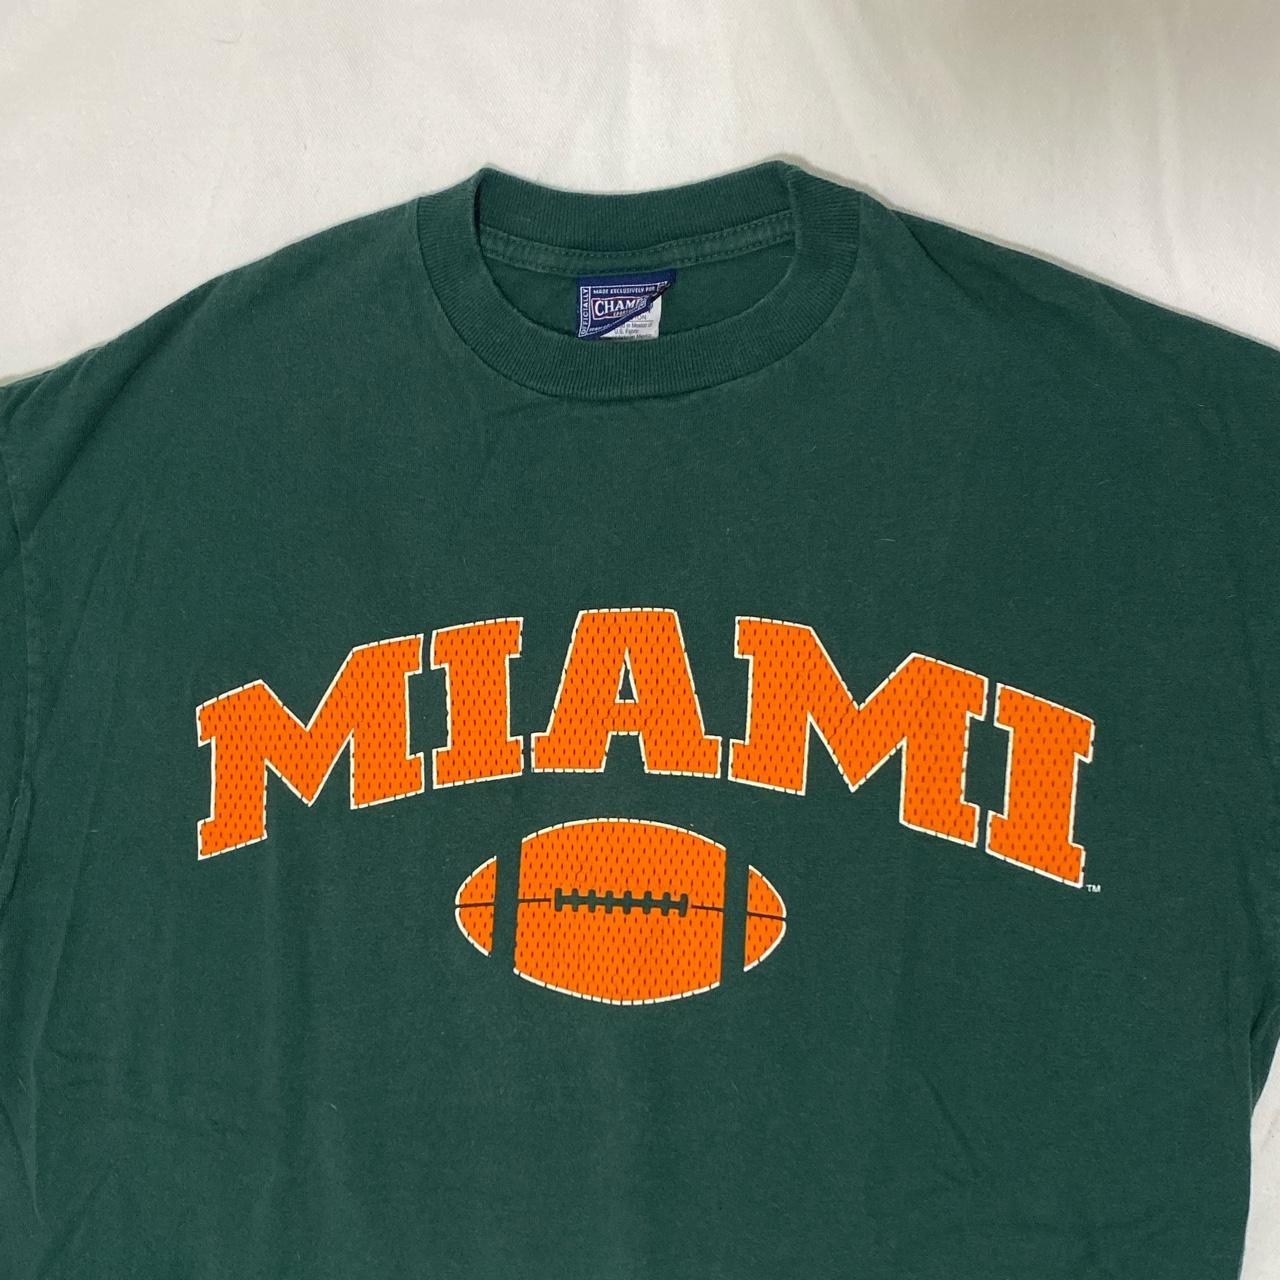 Vintage University of Miami Hurricanes Football - Depop